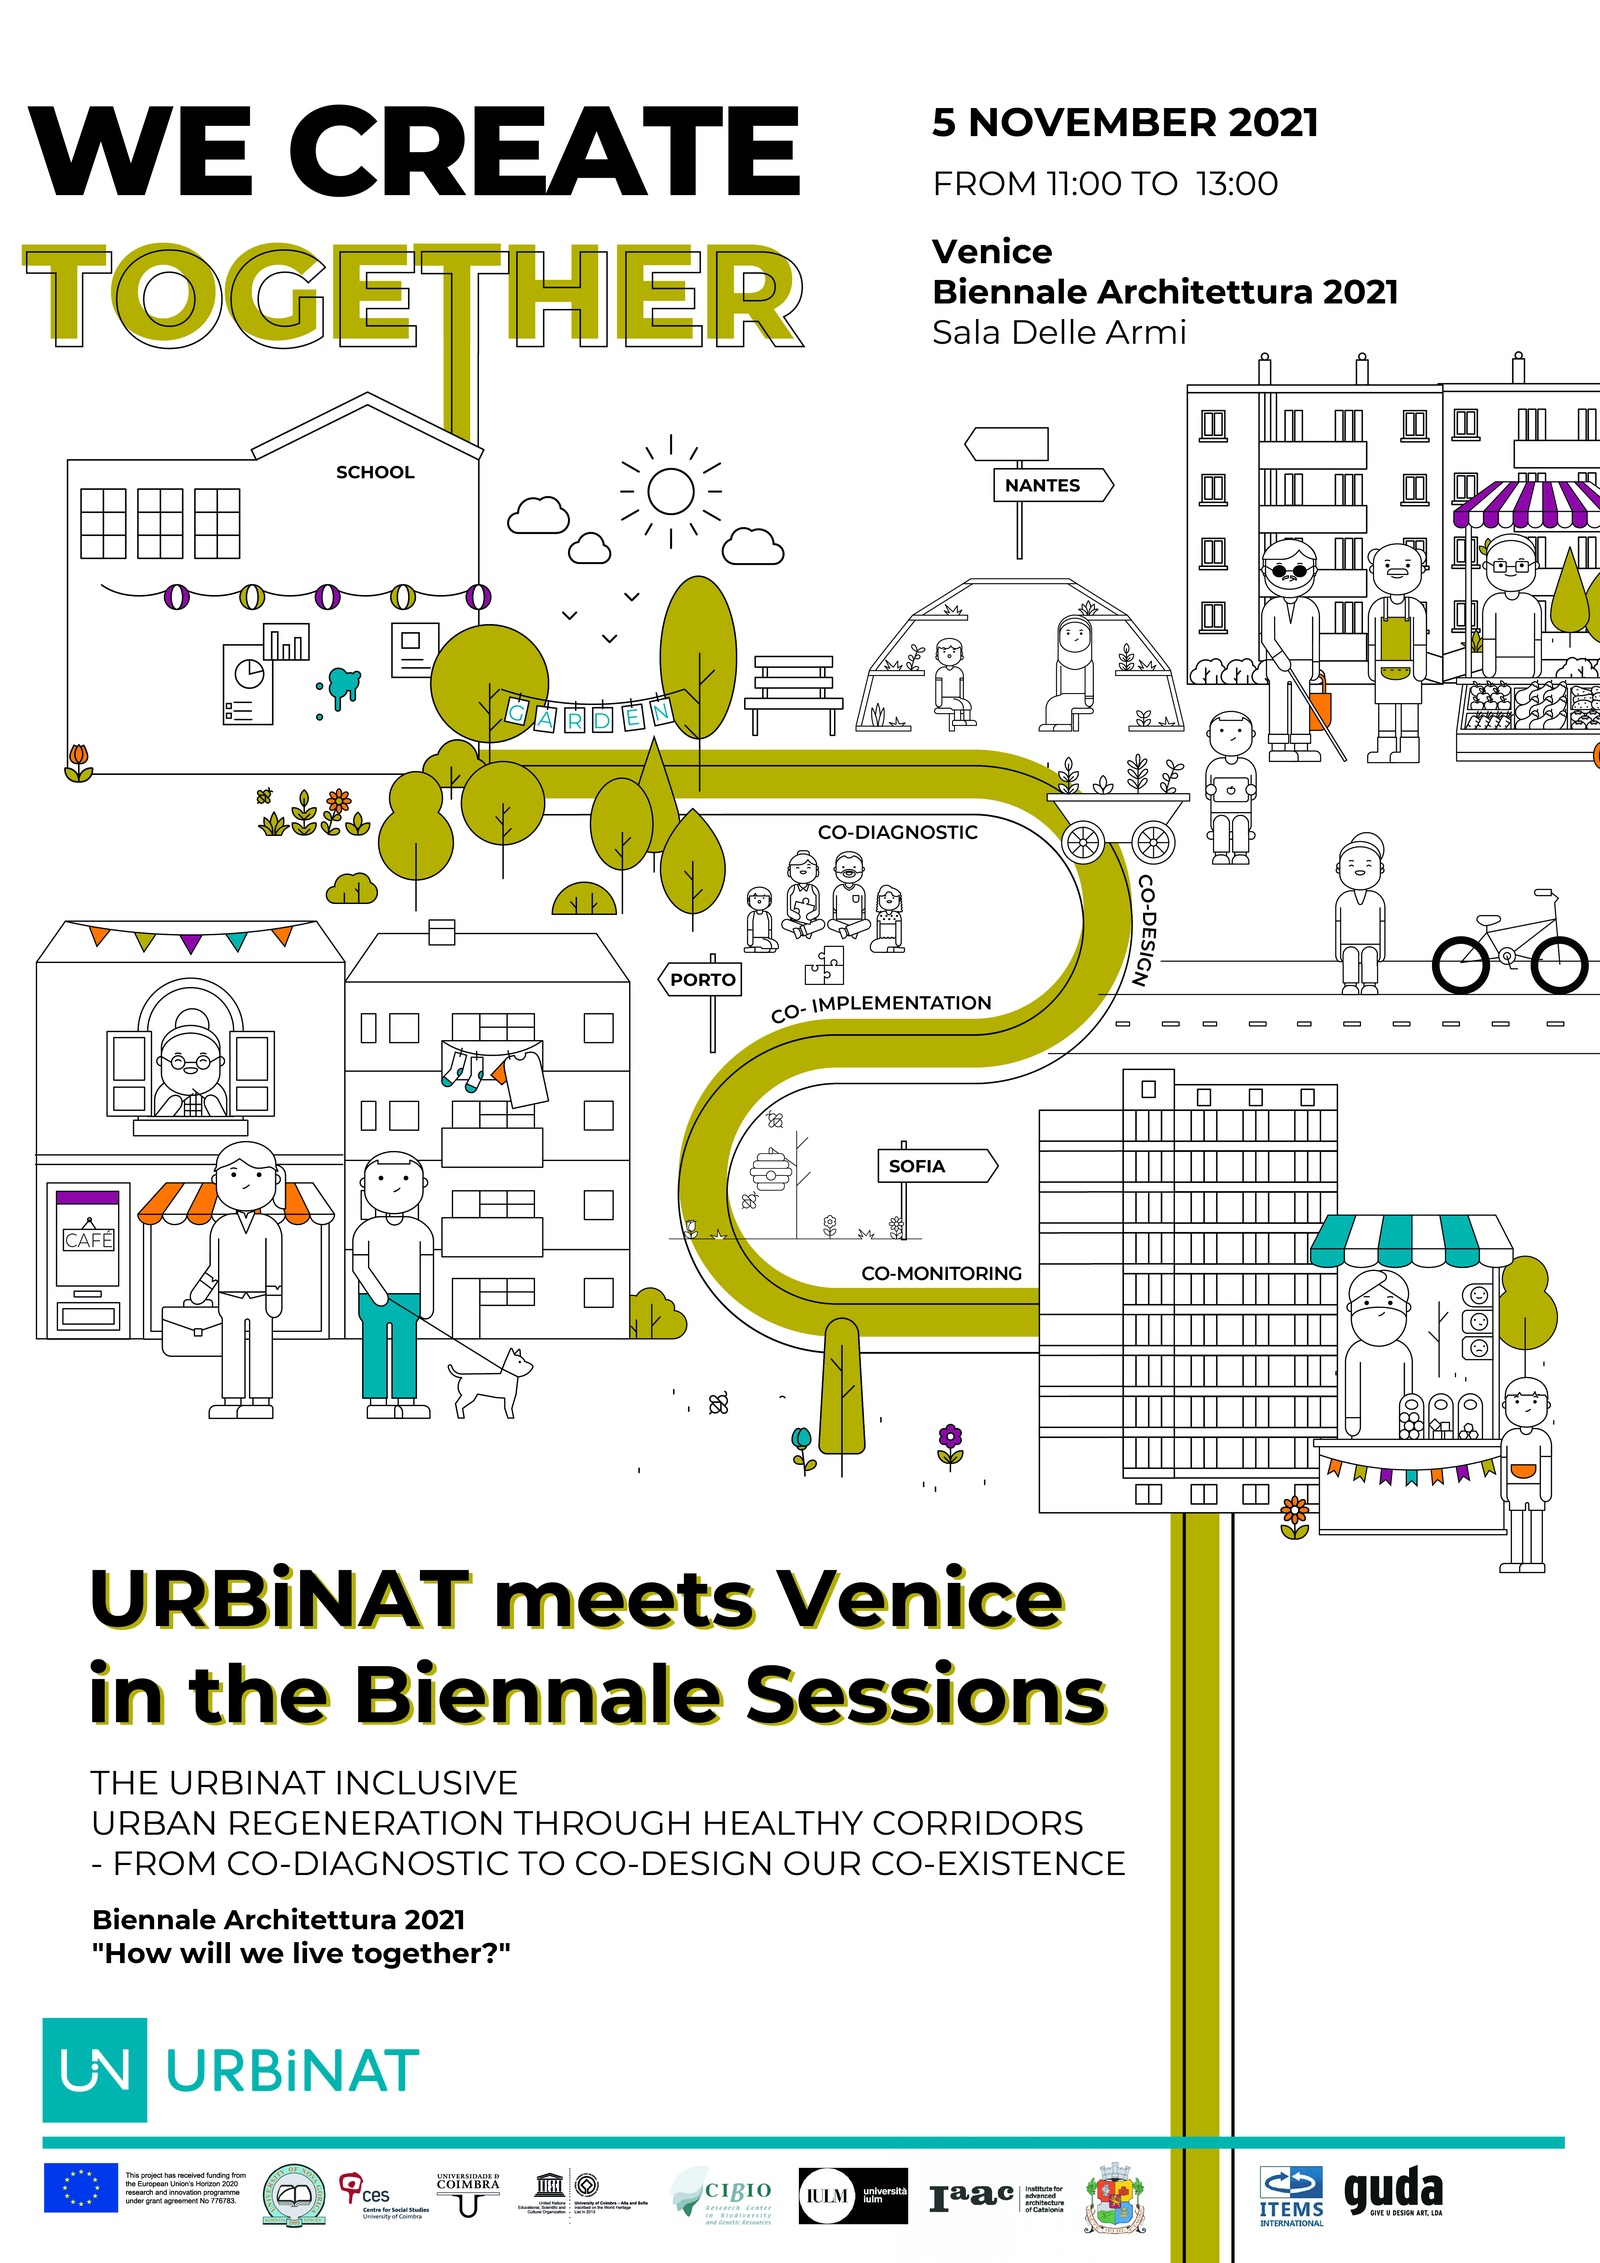 University of Nova Gorica and URBiNAT at Venice Biennale d'Architettura 2021